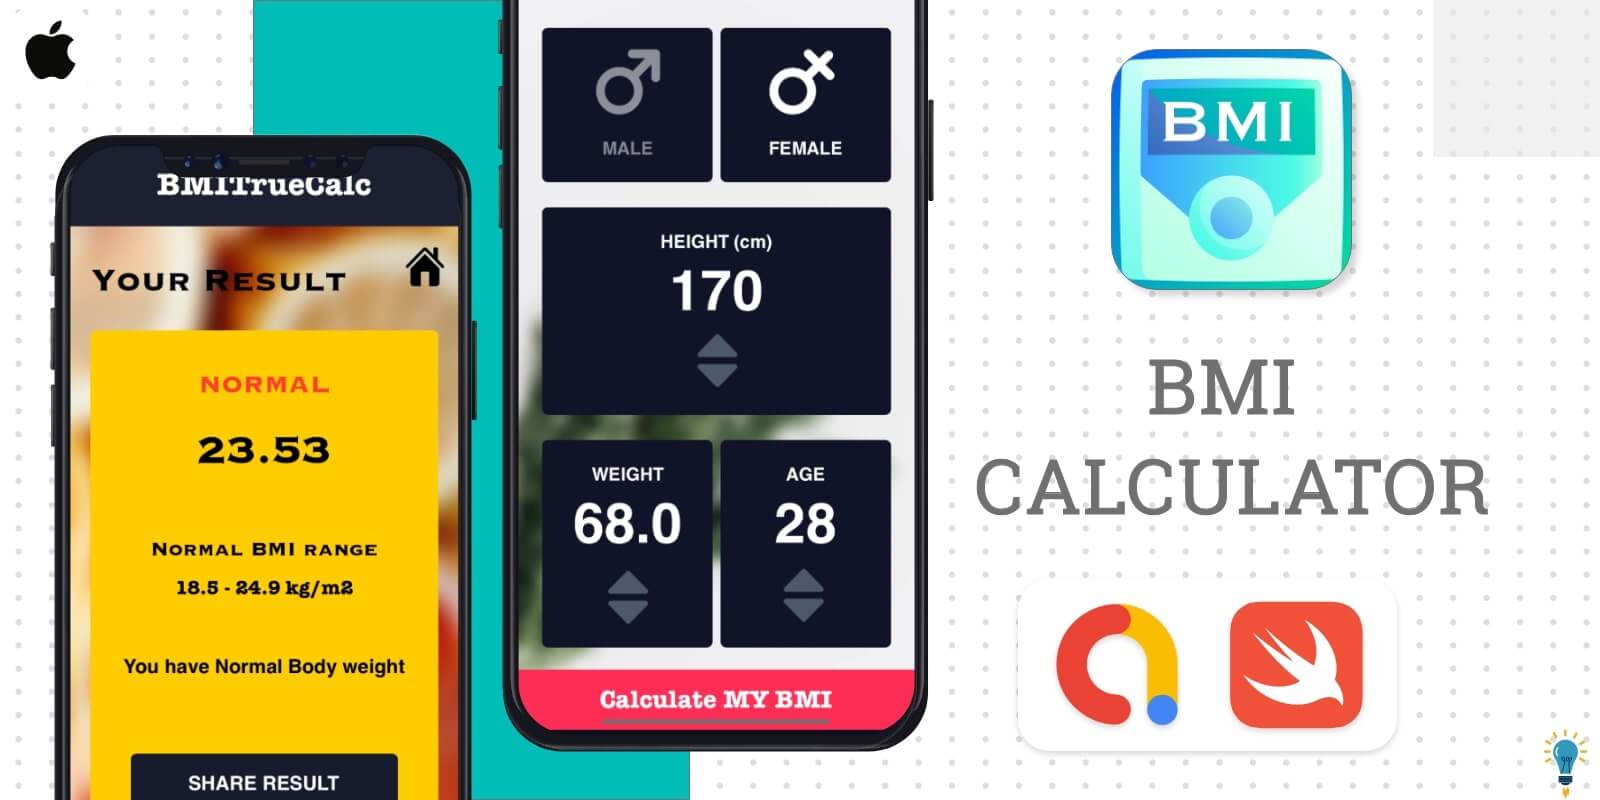 BMI Calculator – iOS Source Code